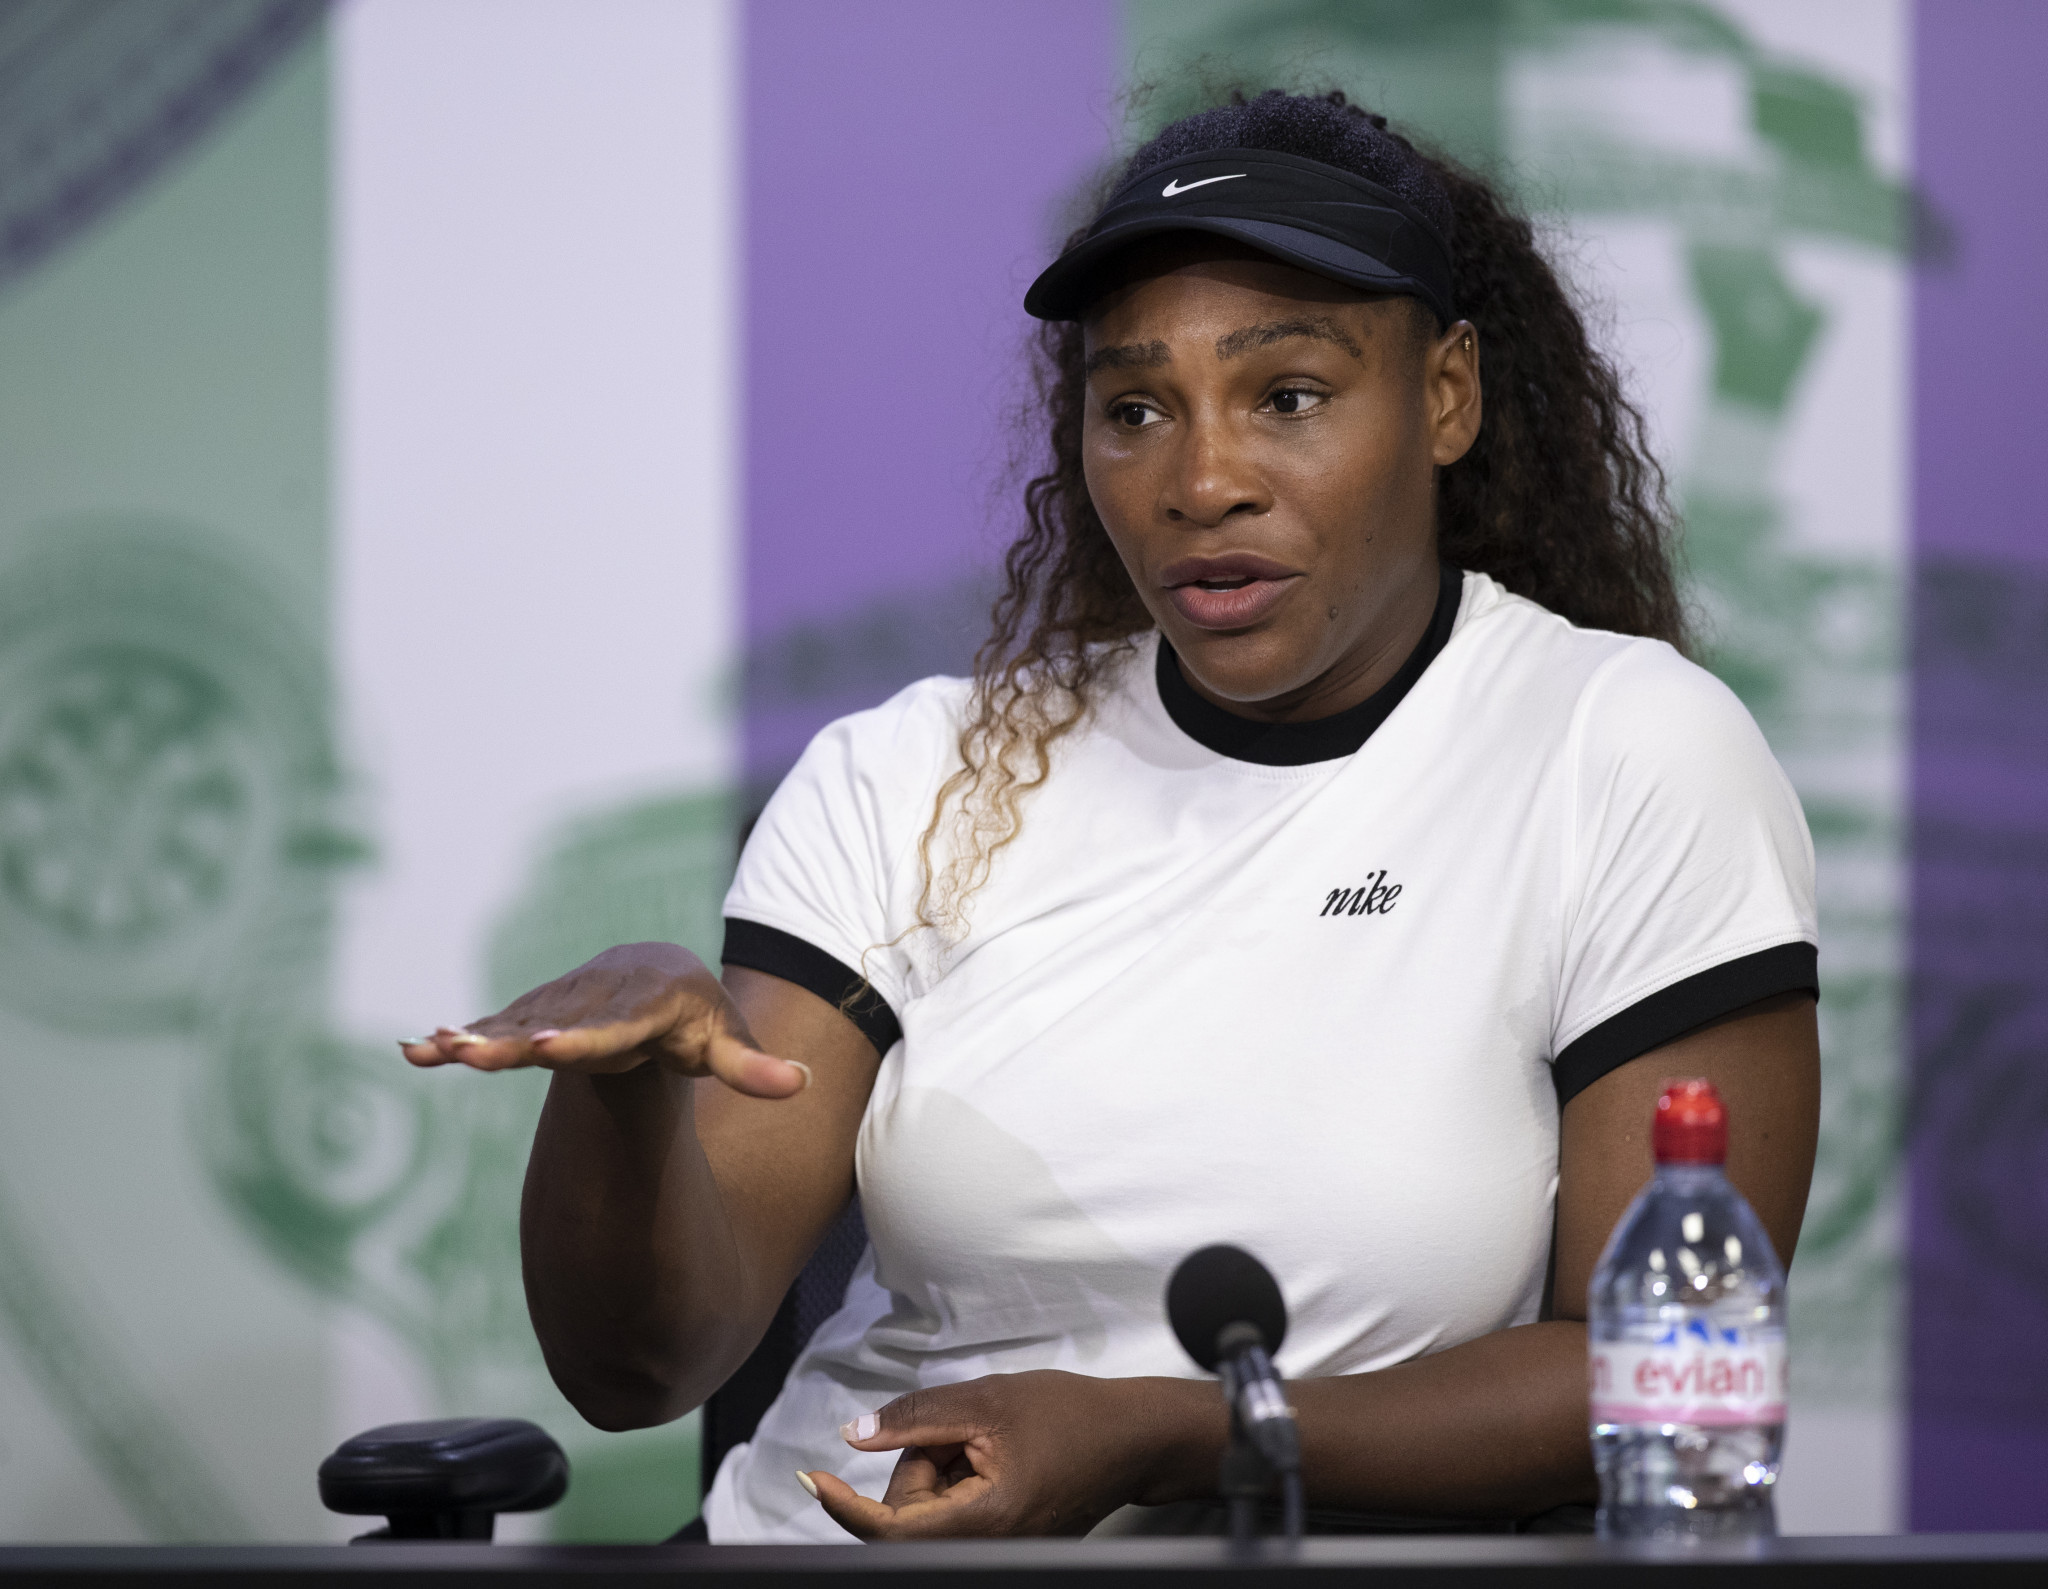 23-time Grand Slam champion Serena Williams complains regular drug testing "unfair"